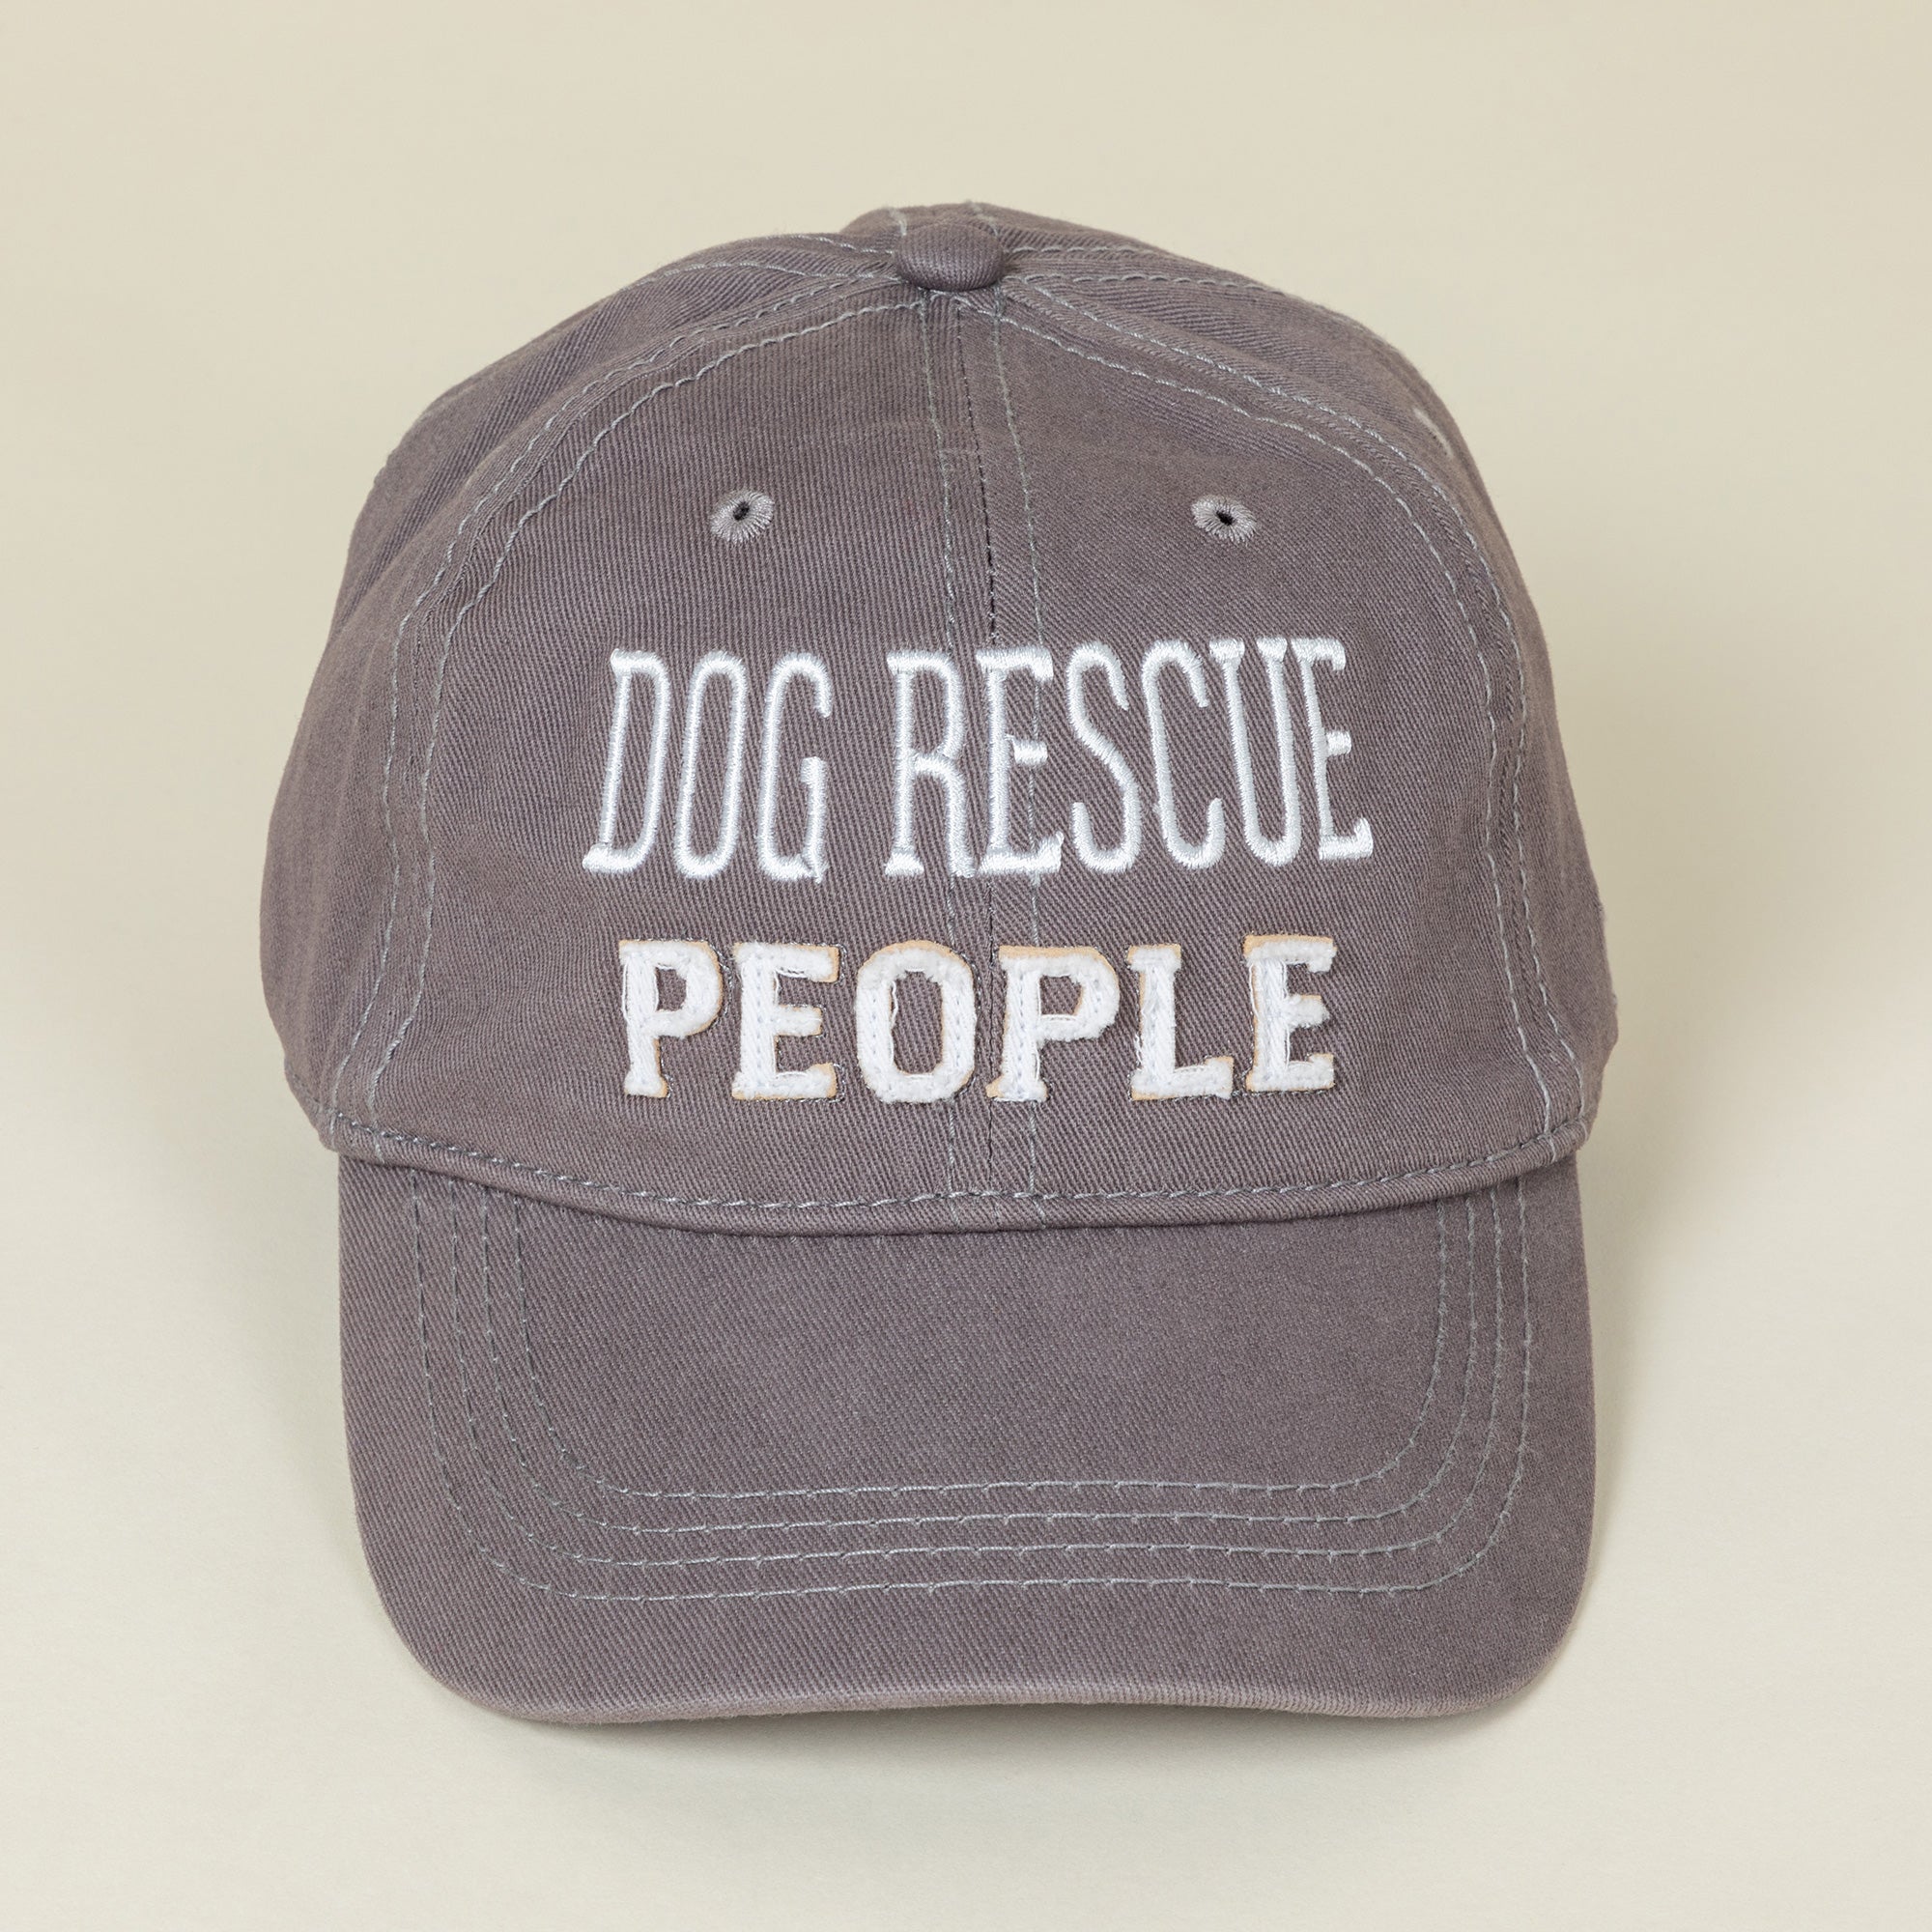 Animal Rescue People Baseball Hat - Gray - Dog